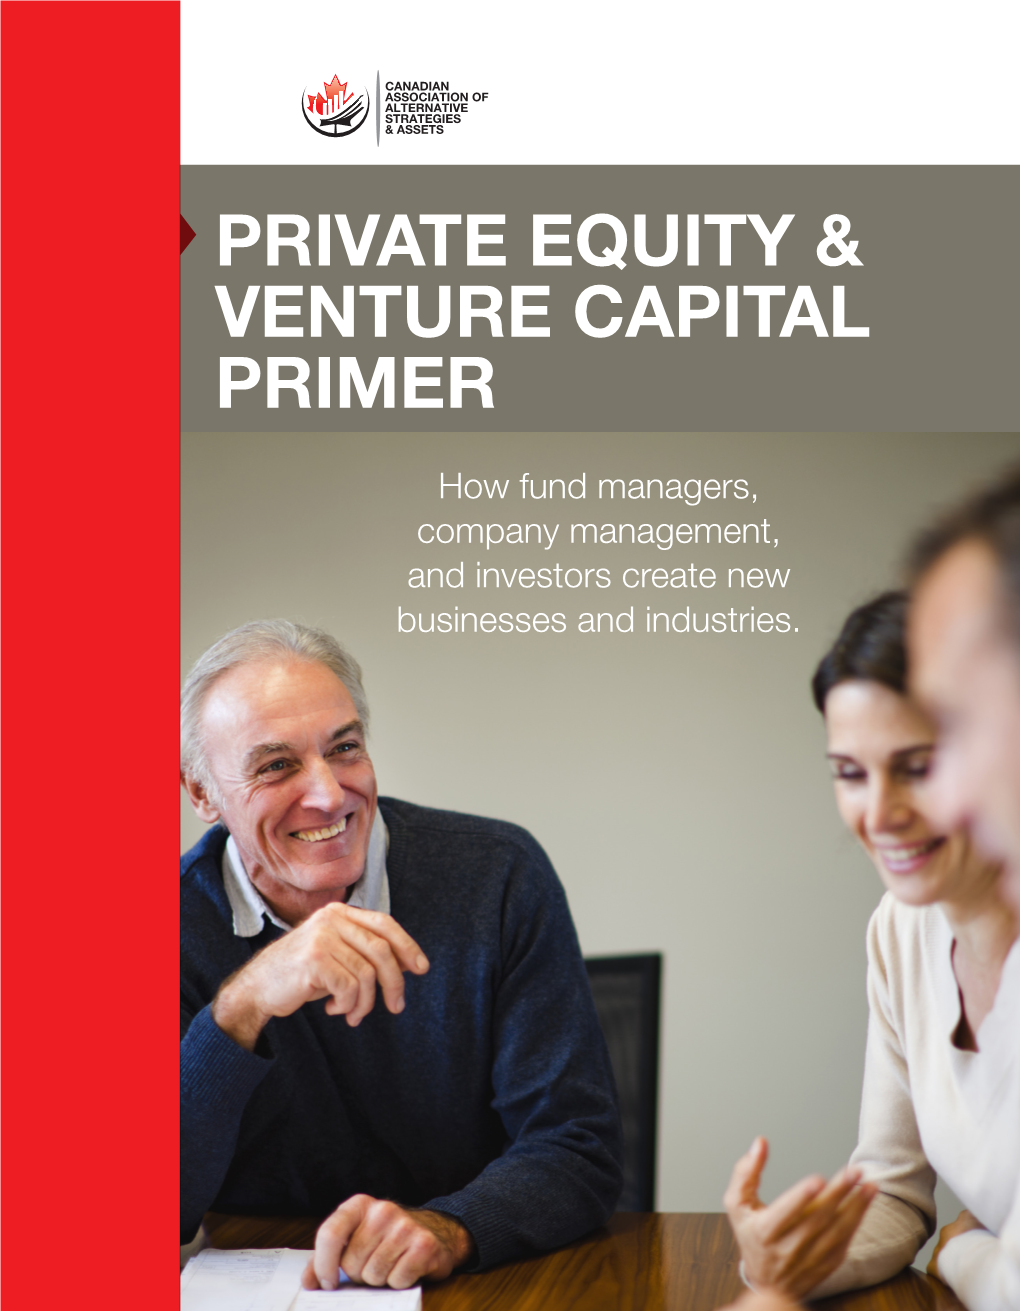 Private Equity & Venture Capital Primer